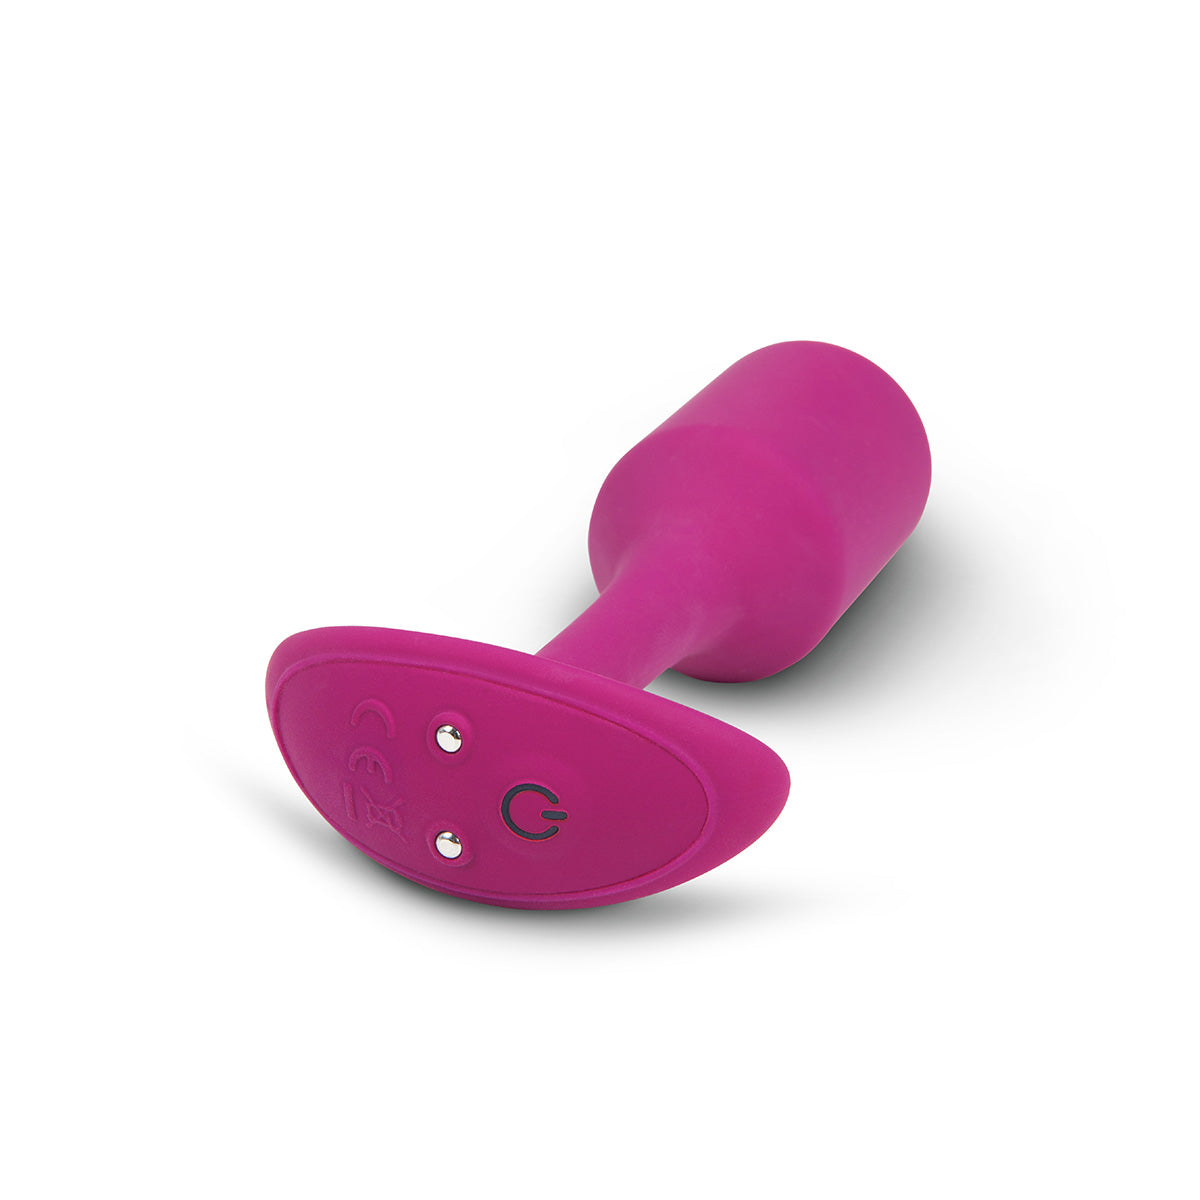 B-Vibe Vibrating Snug Plug 2 (M) - Rose Intimates Adult Boutique